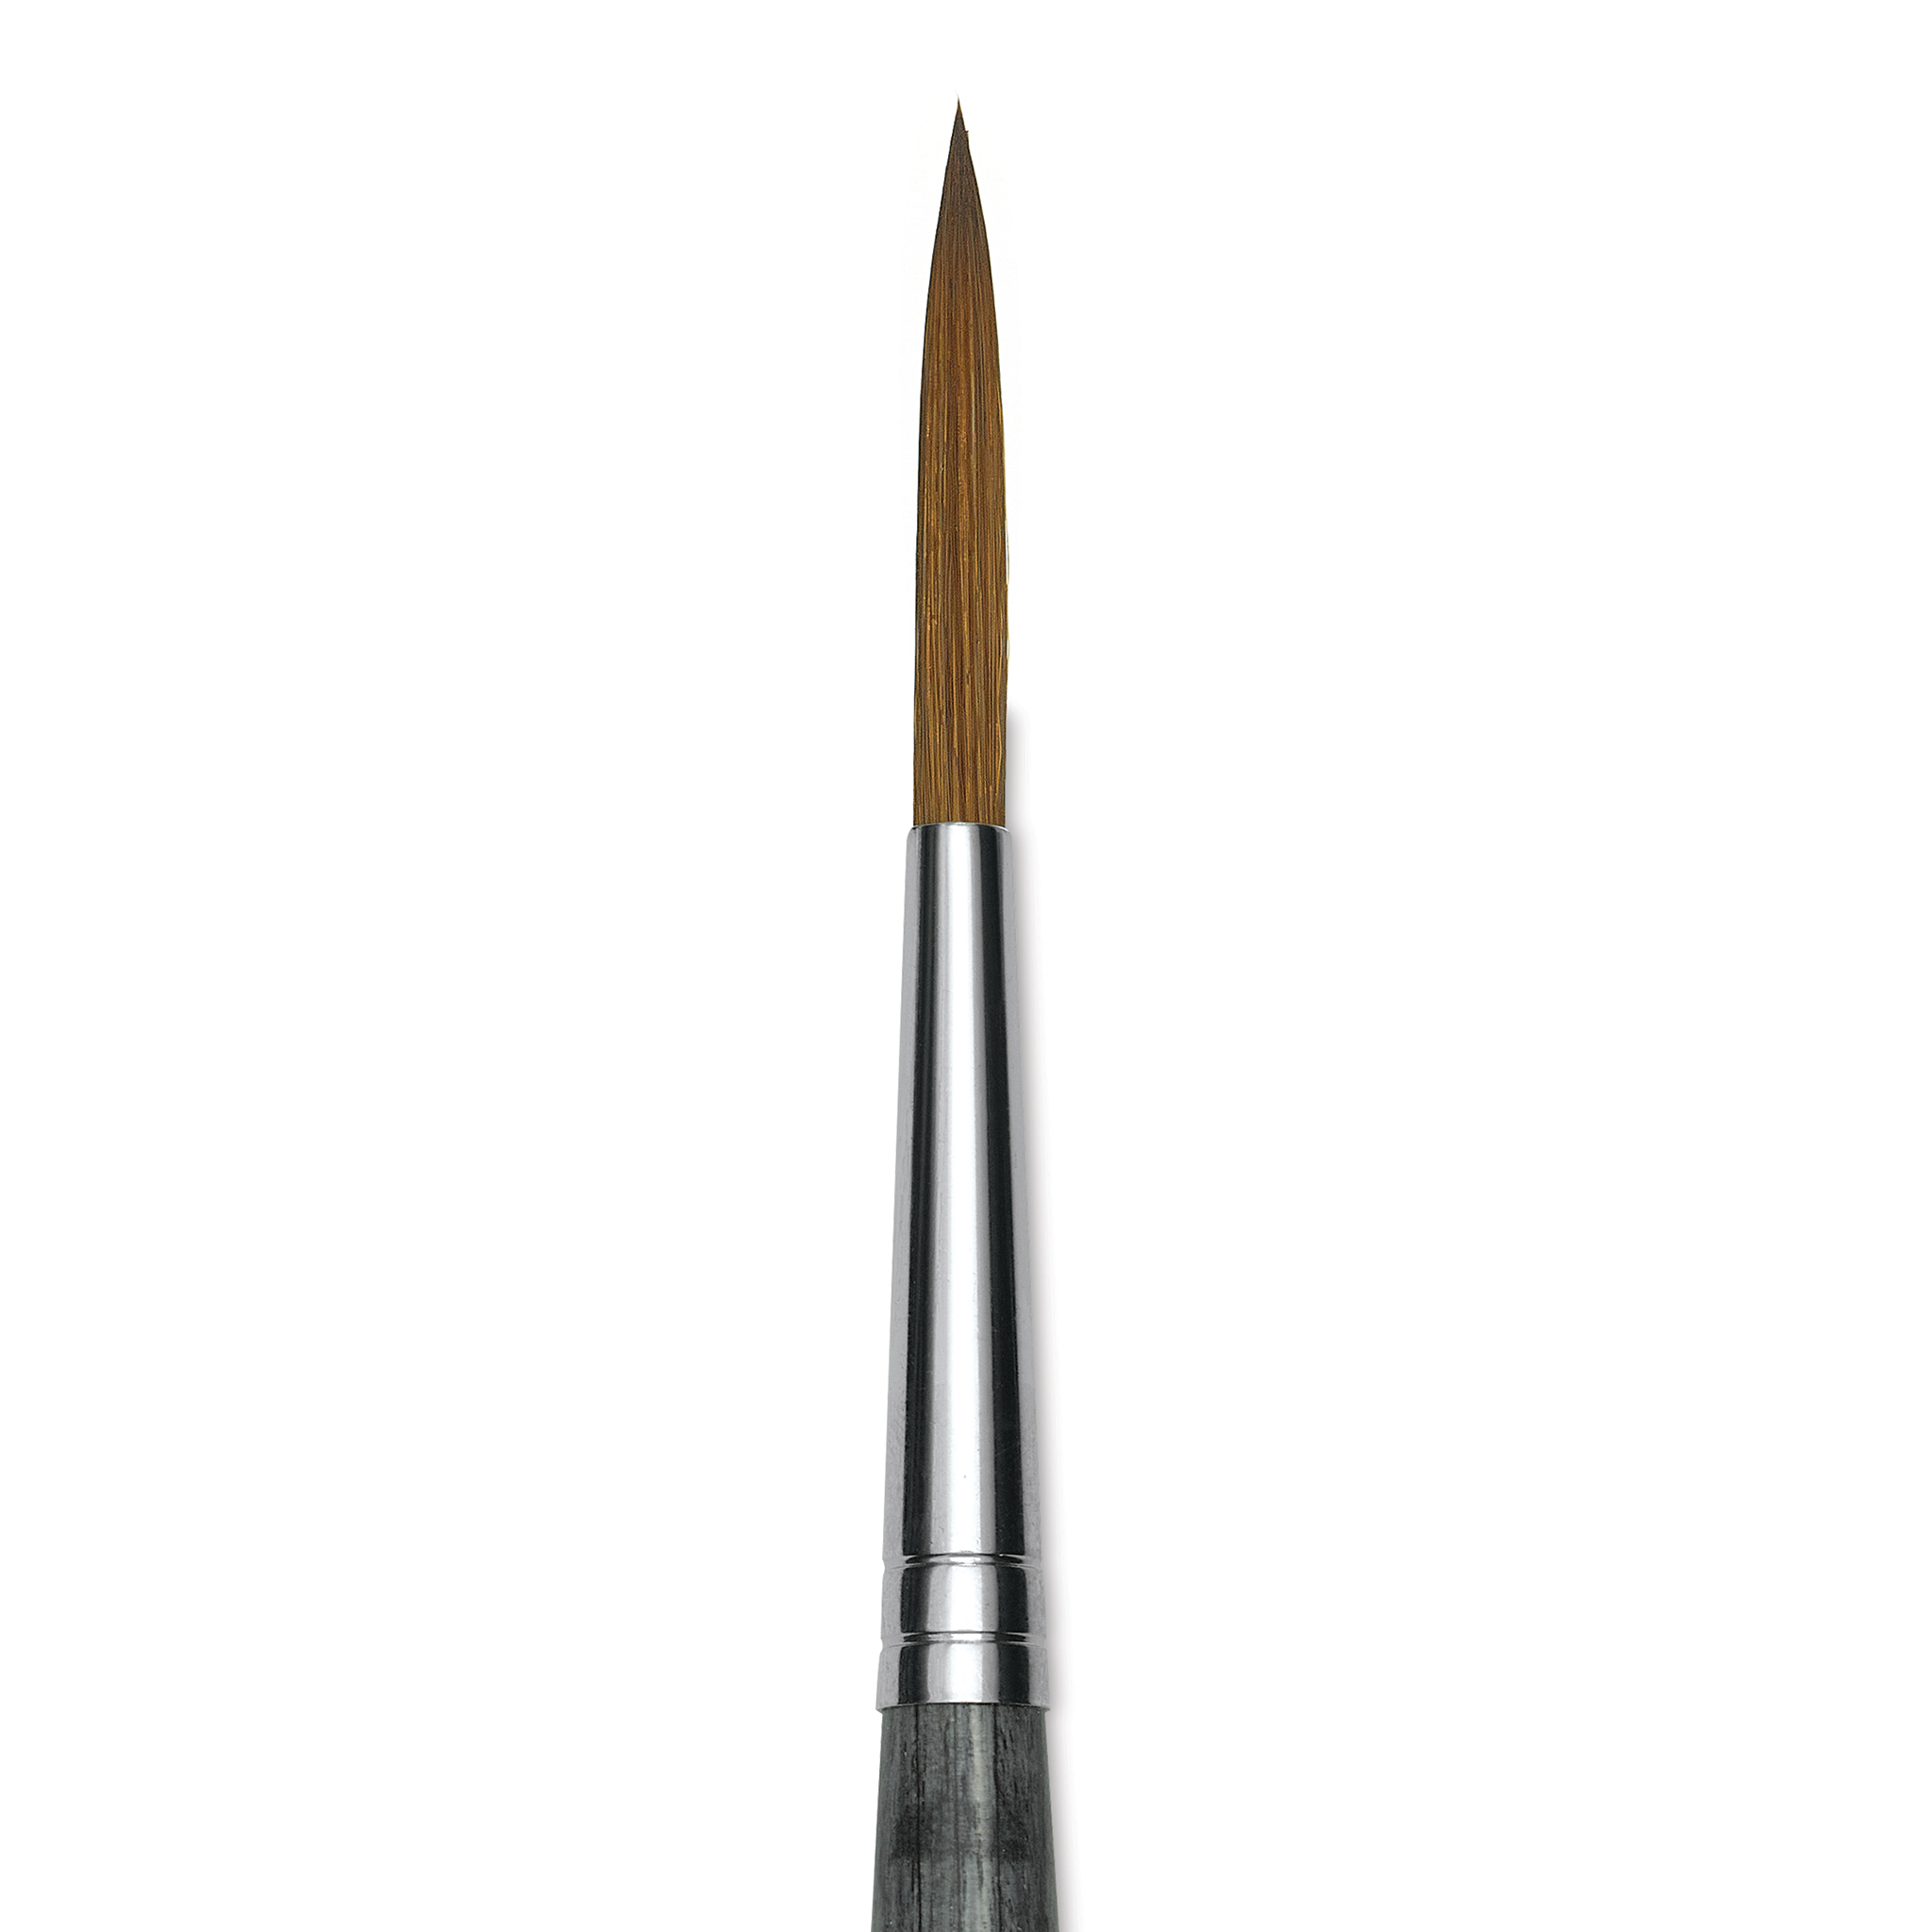 Da Vinci Colineo Synthetic Kolinsky Sable Brush - Rigger, Size 12, Short Handle